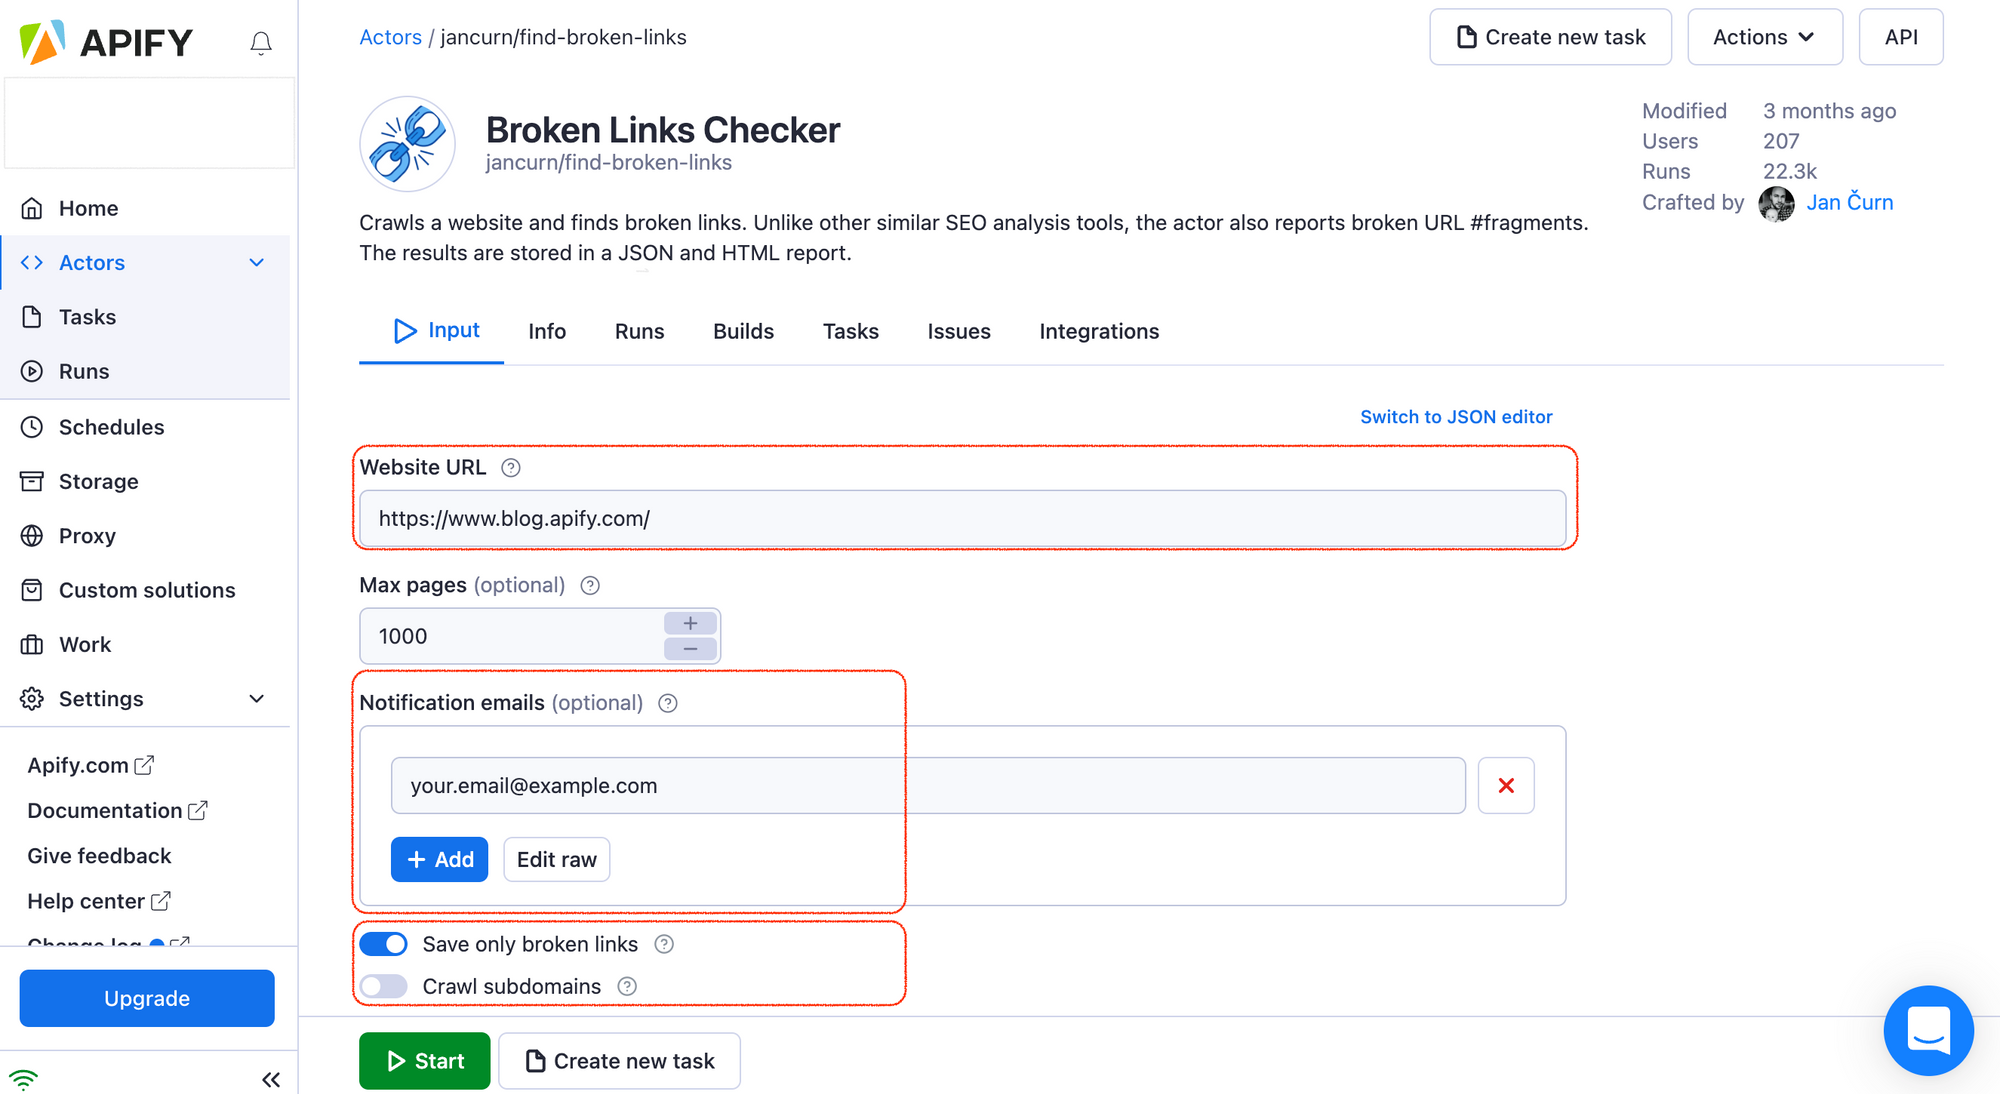 The input fields for Broken Links Checker